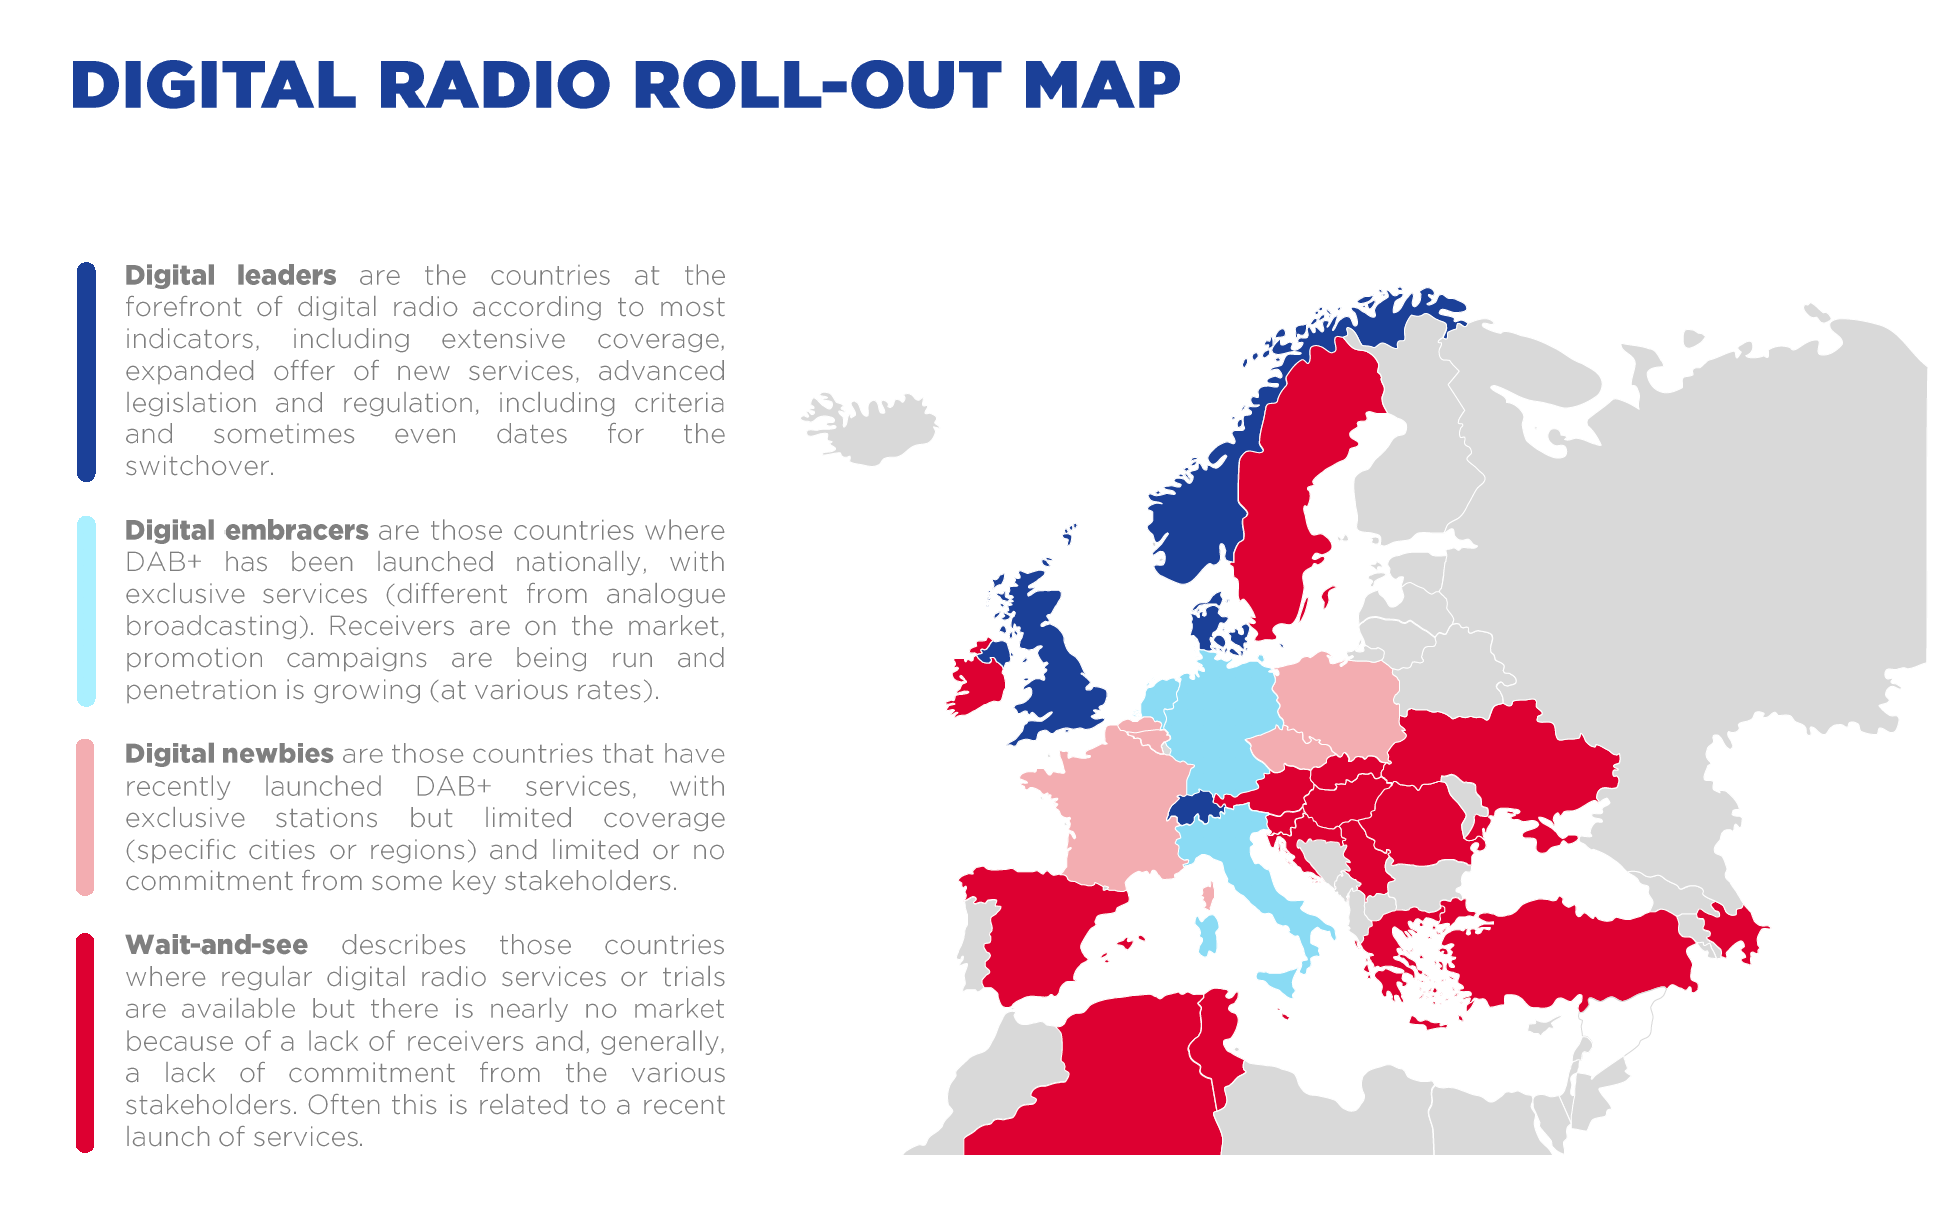 Sources : EBU Media Intelligence Service - Digital Radio 2020